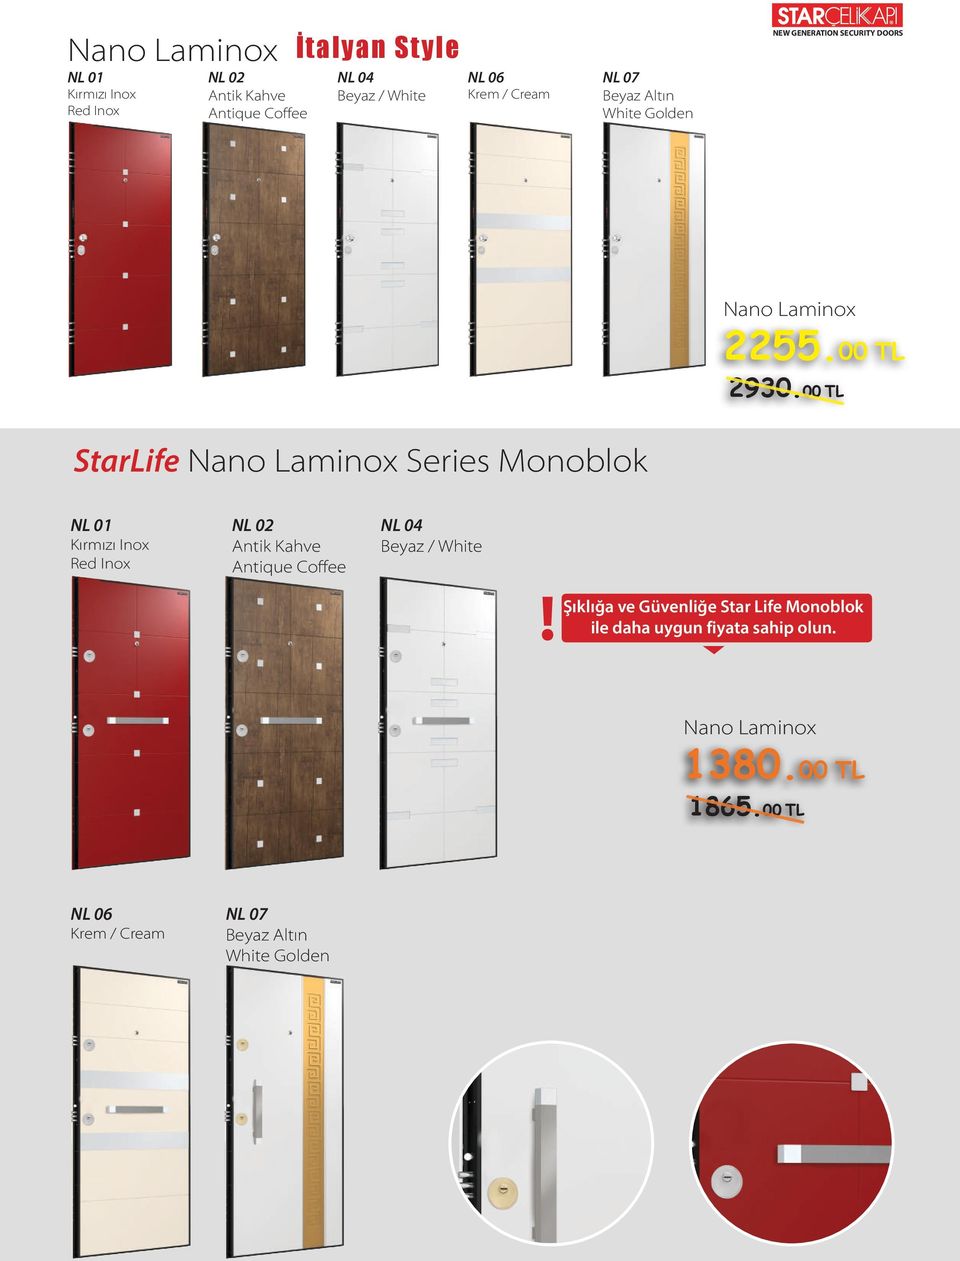 00 TL StarLife Nano Laminox Series Monoblok NL 01 Kırmızı Inox Red Inox NL 02 Antik Kahve Antique Coffee NL 04 Beyaz /